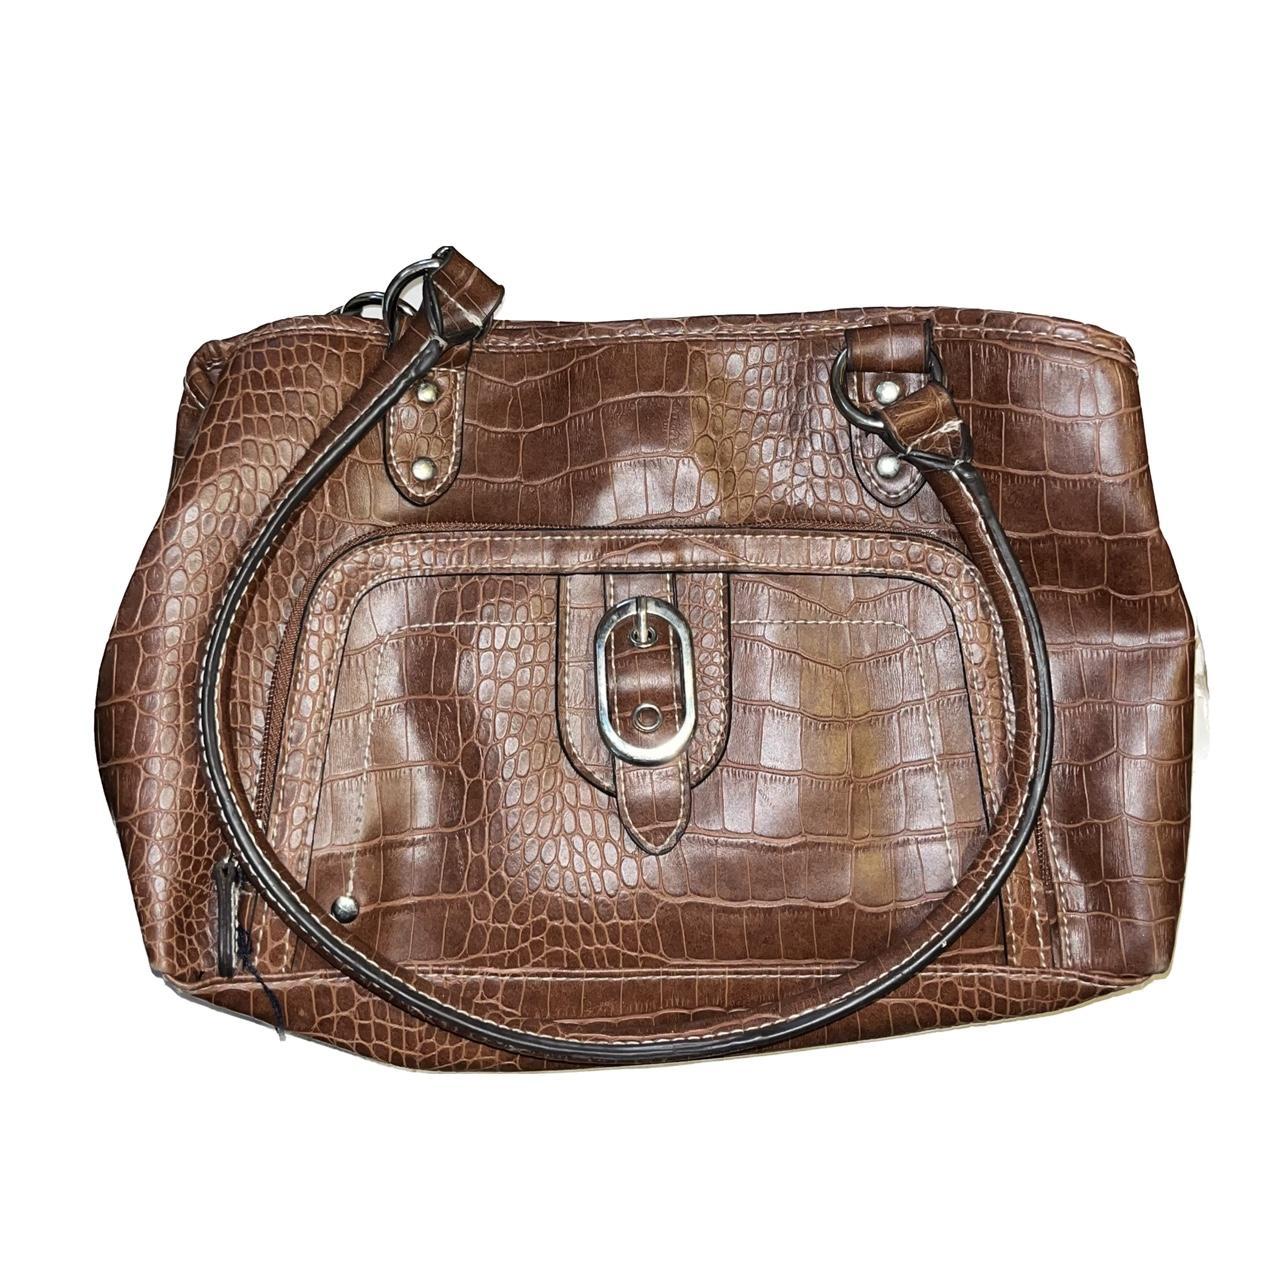 BOSTANTEN Leather Handbags for Women Fashion Satchel Purses Top Handle